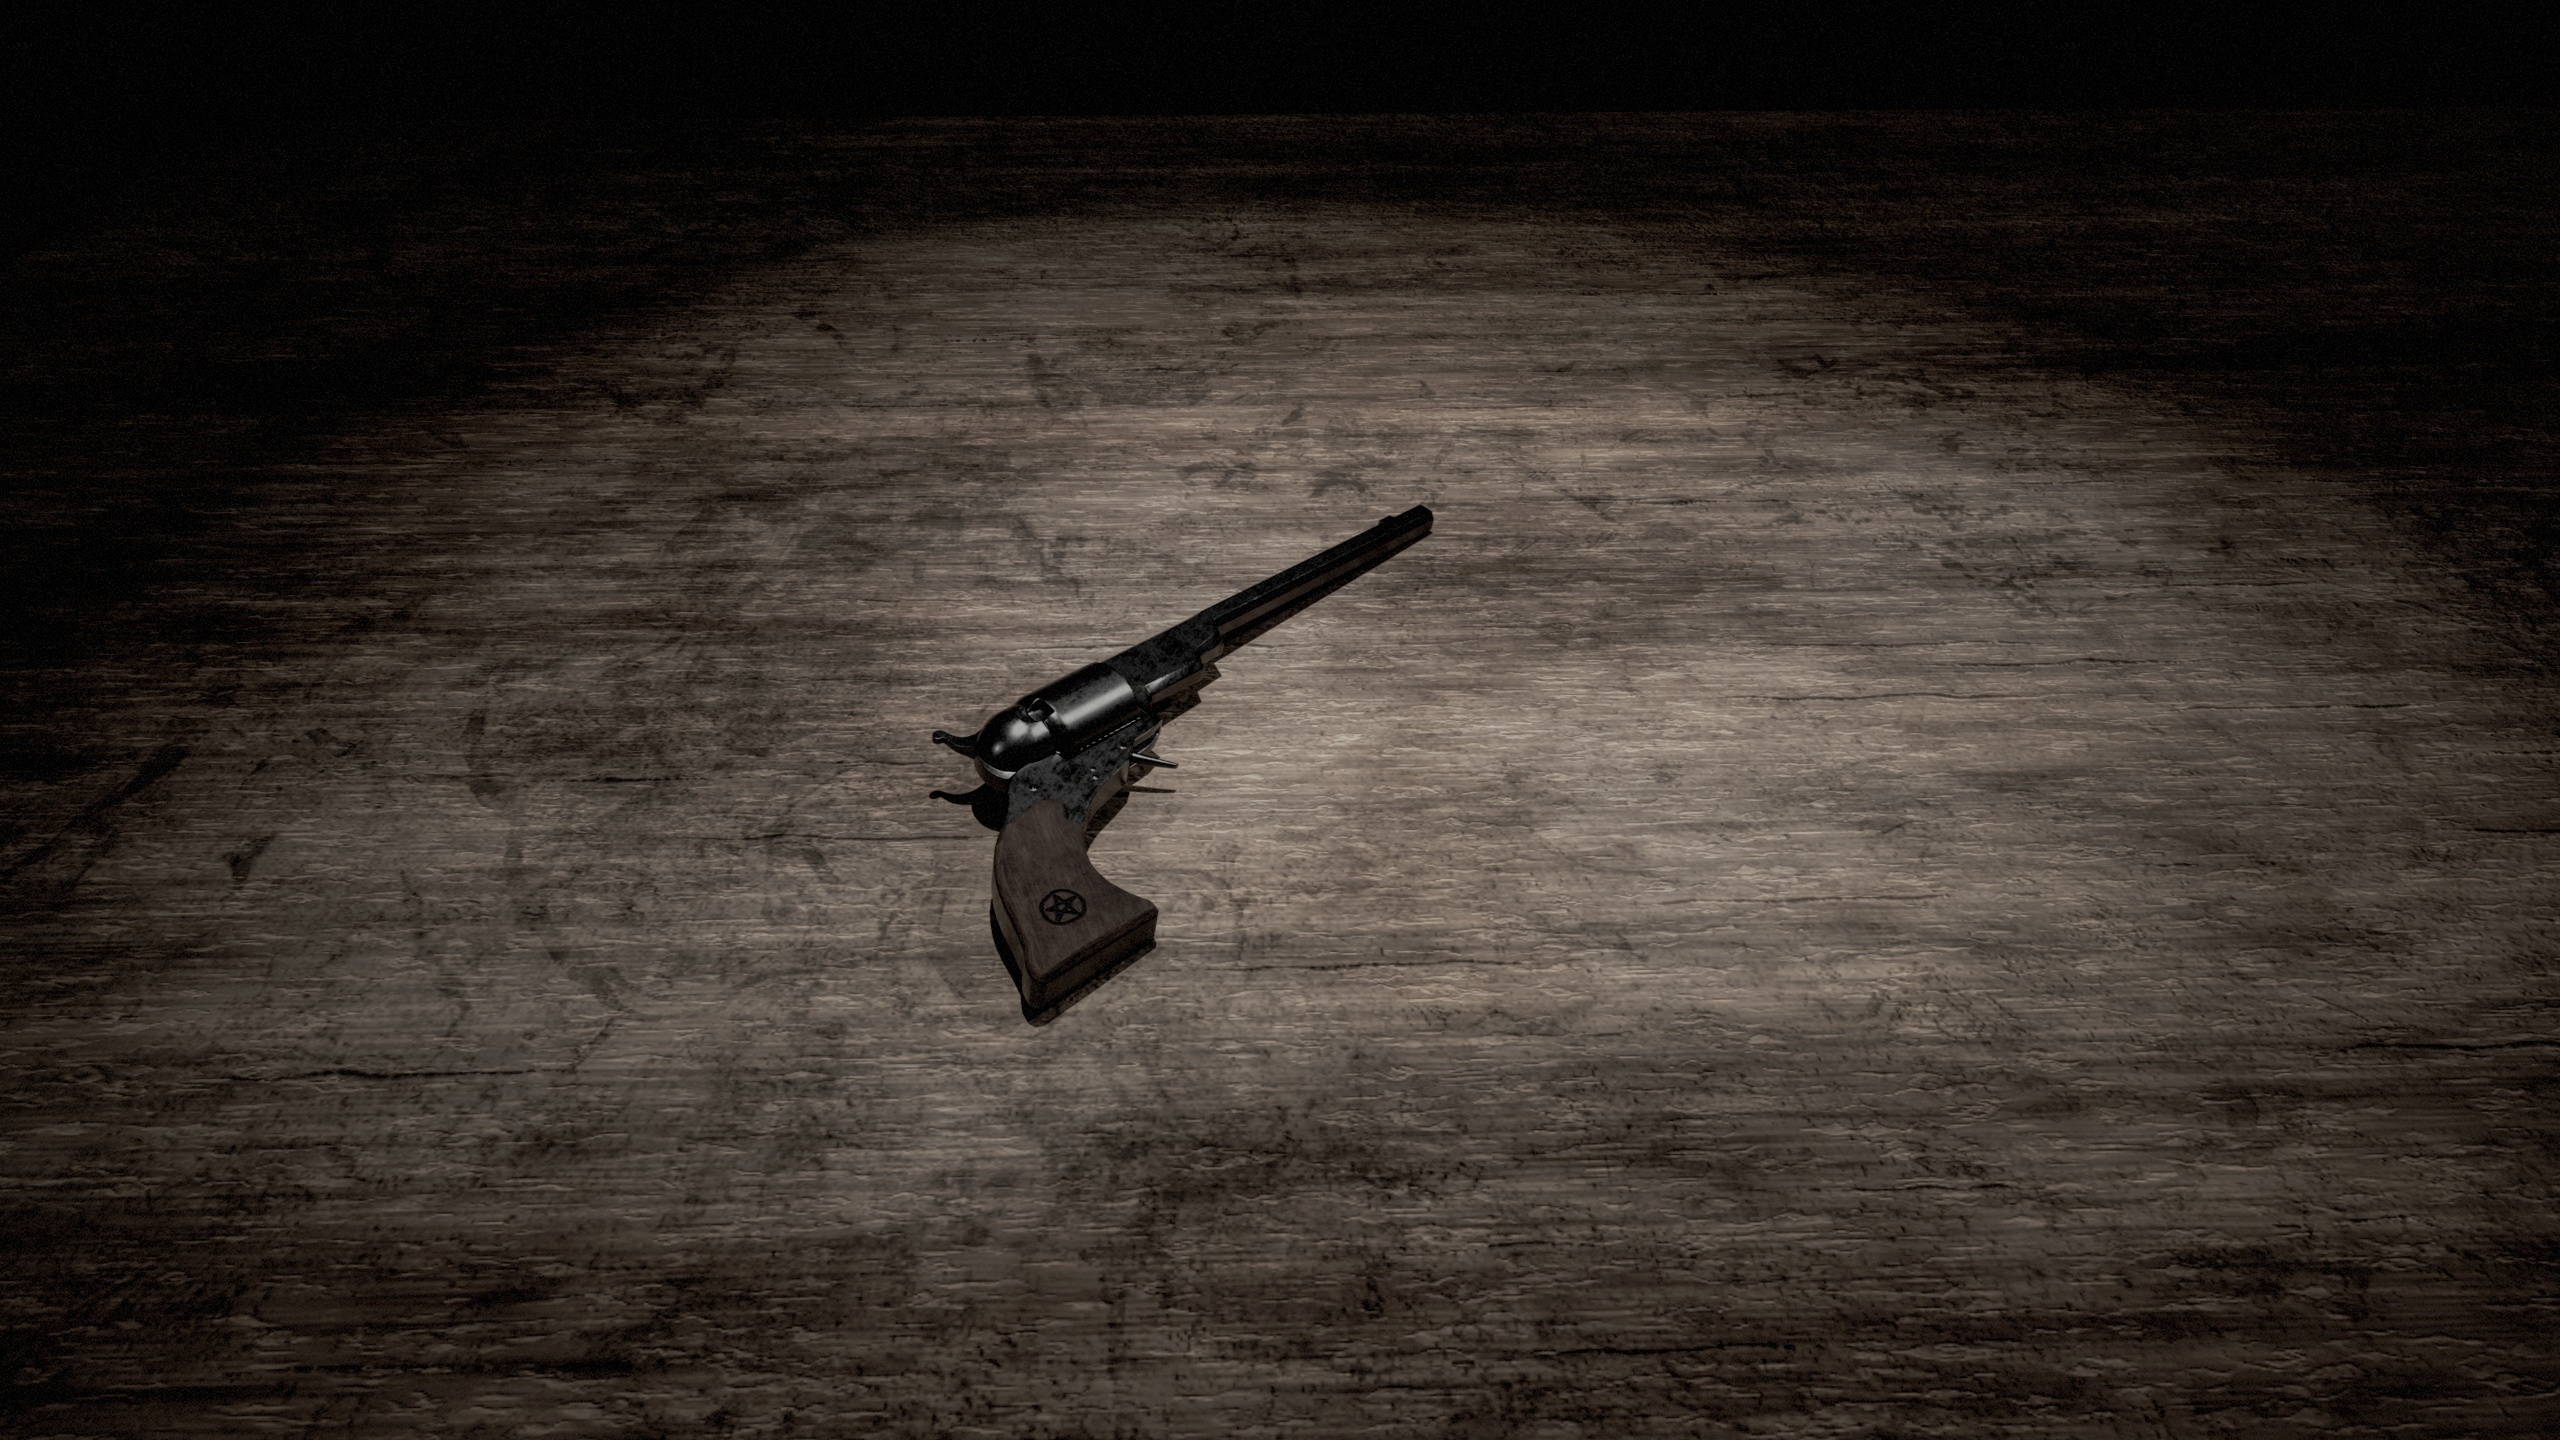 General 2560x1440 Supernatural revolver weapon digital art gun simple background wood texture wood minimalism